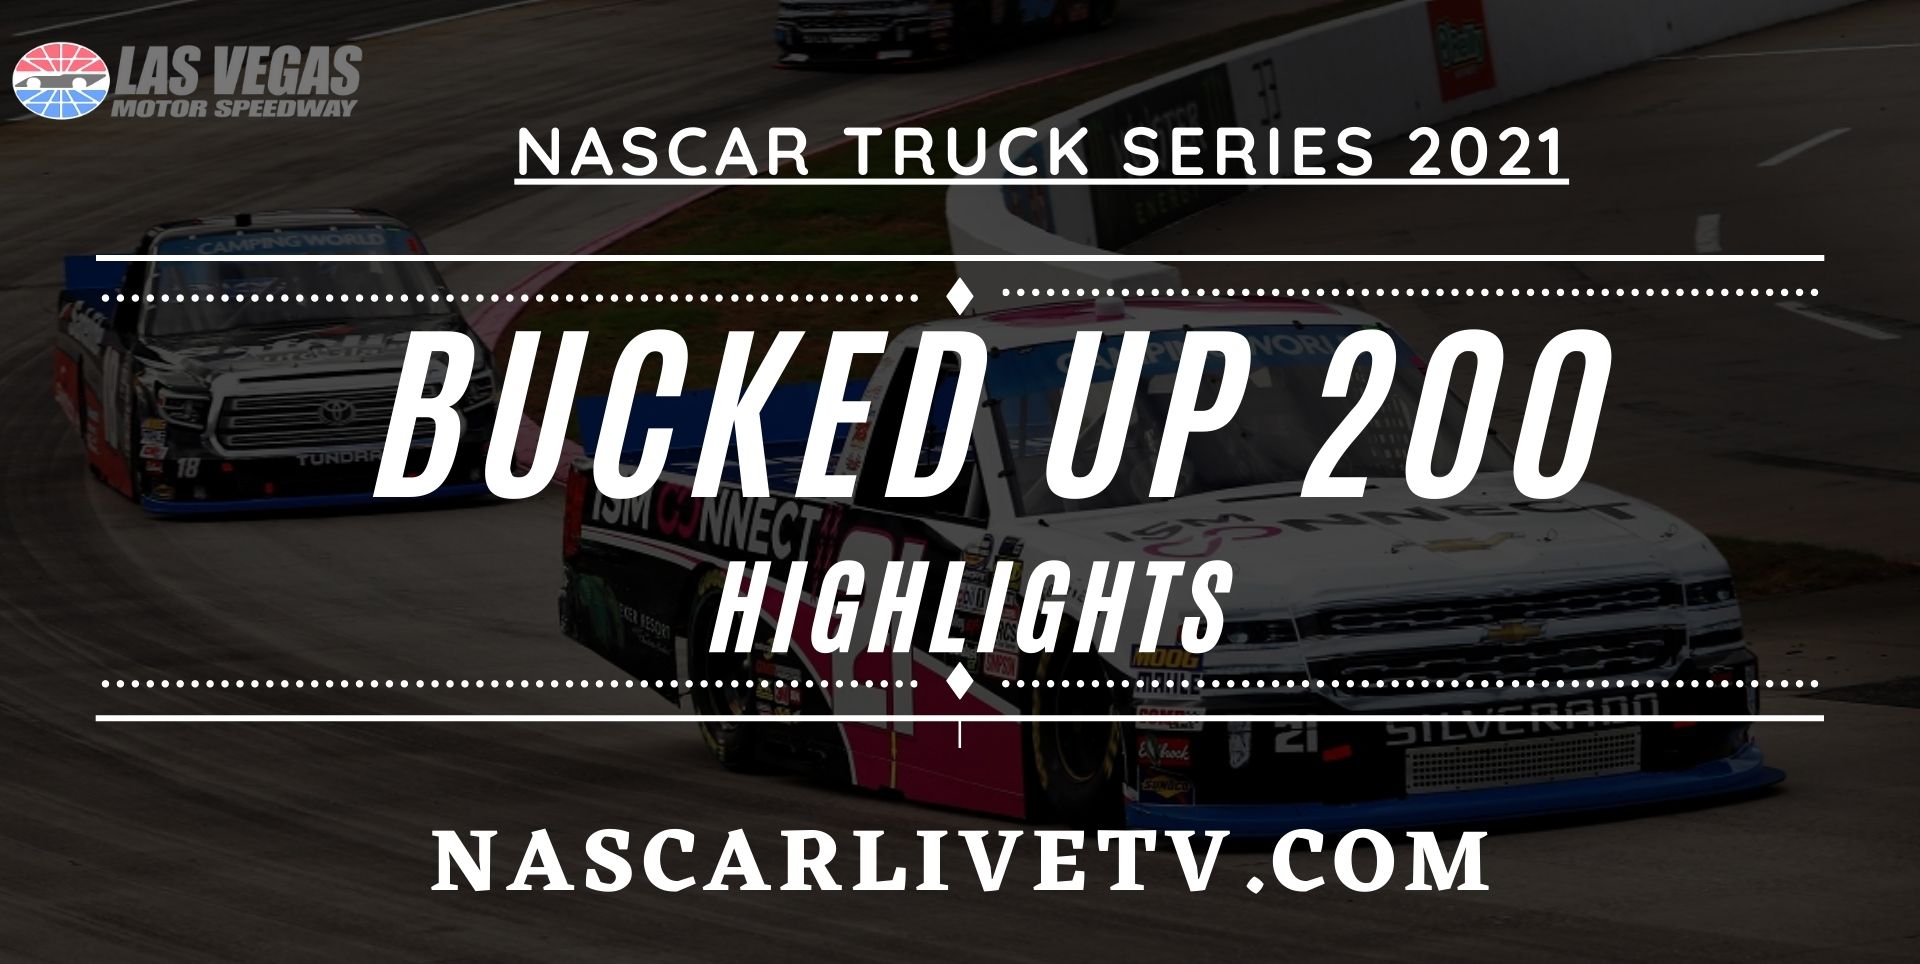 BUCKED UP 200 Highlights NASCAR Truck Series 2021